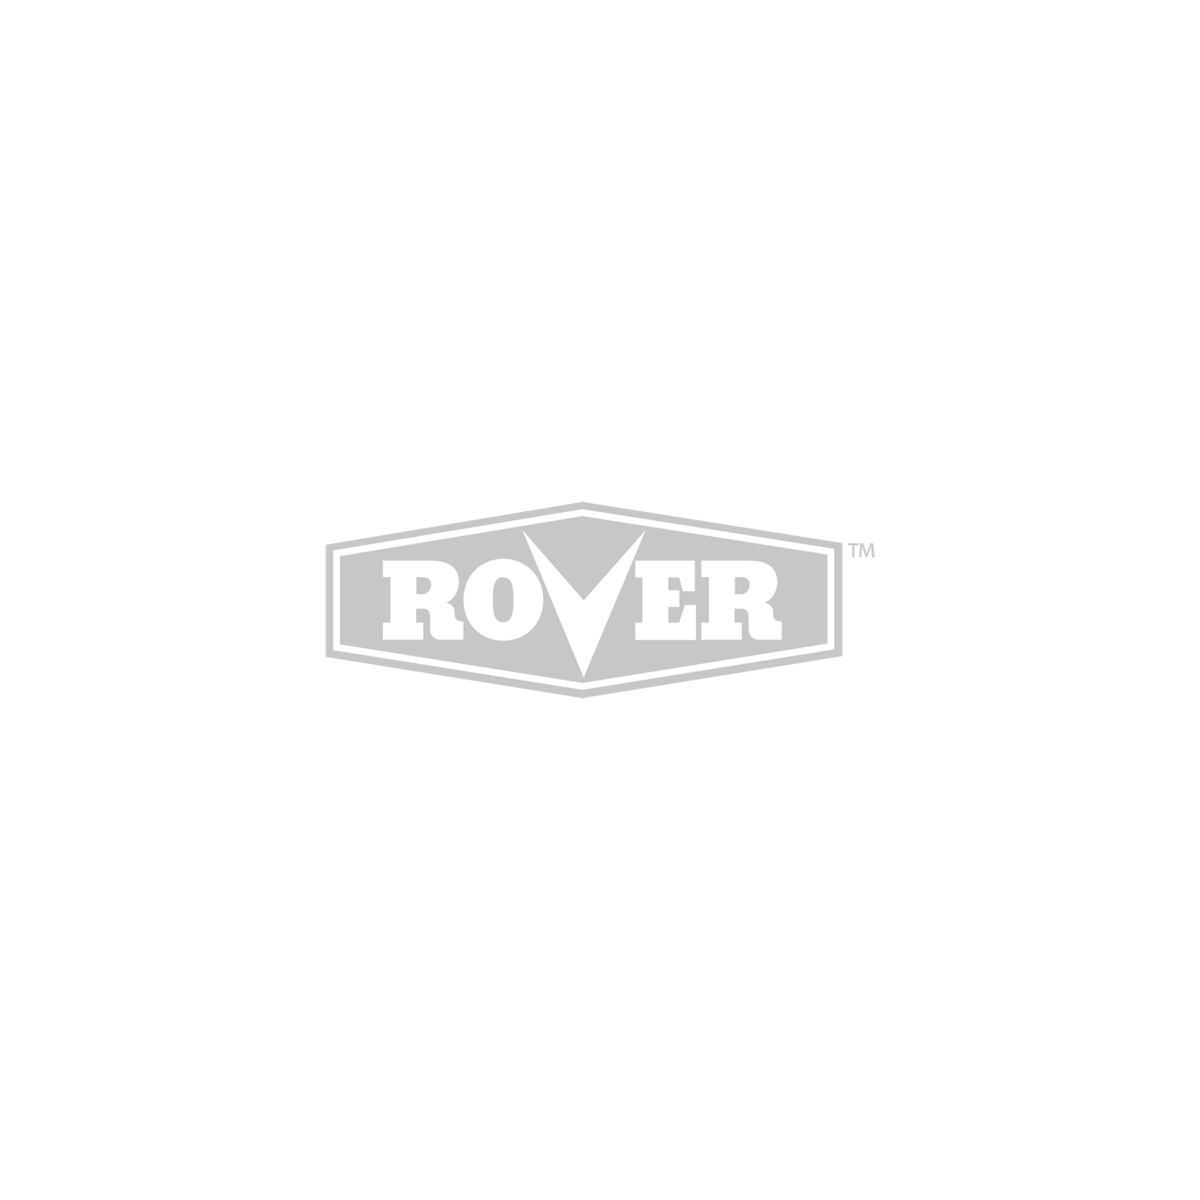 Rover Air Filter